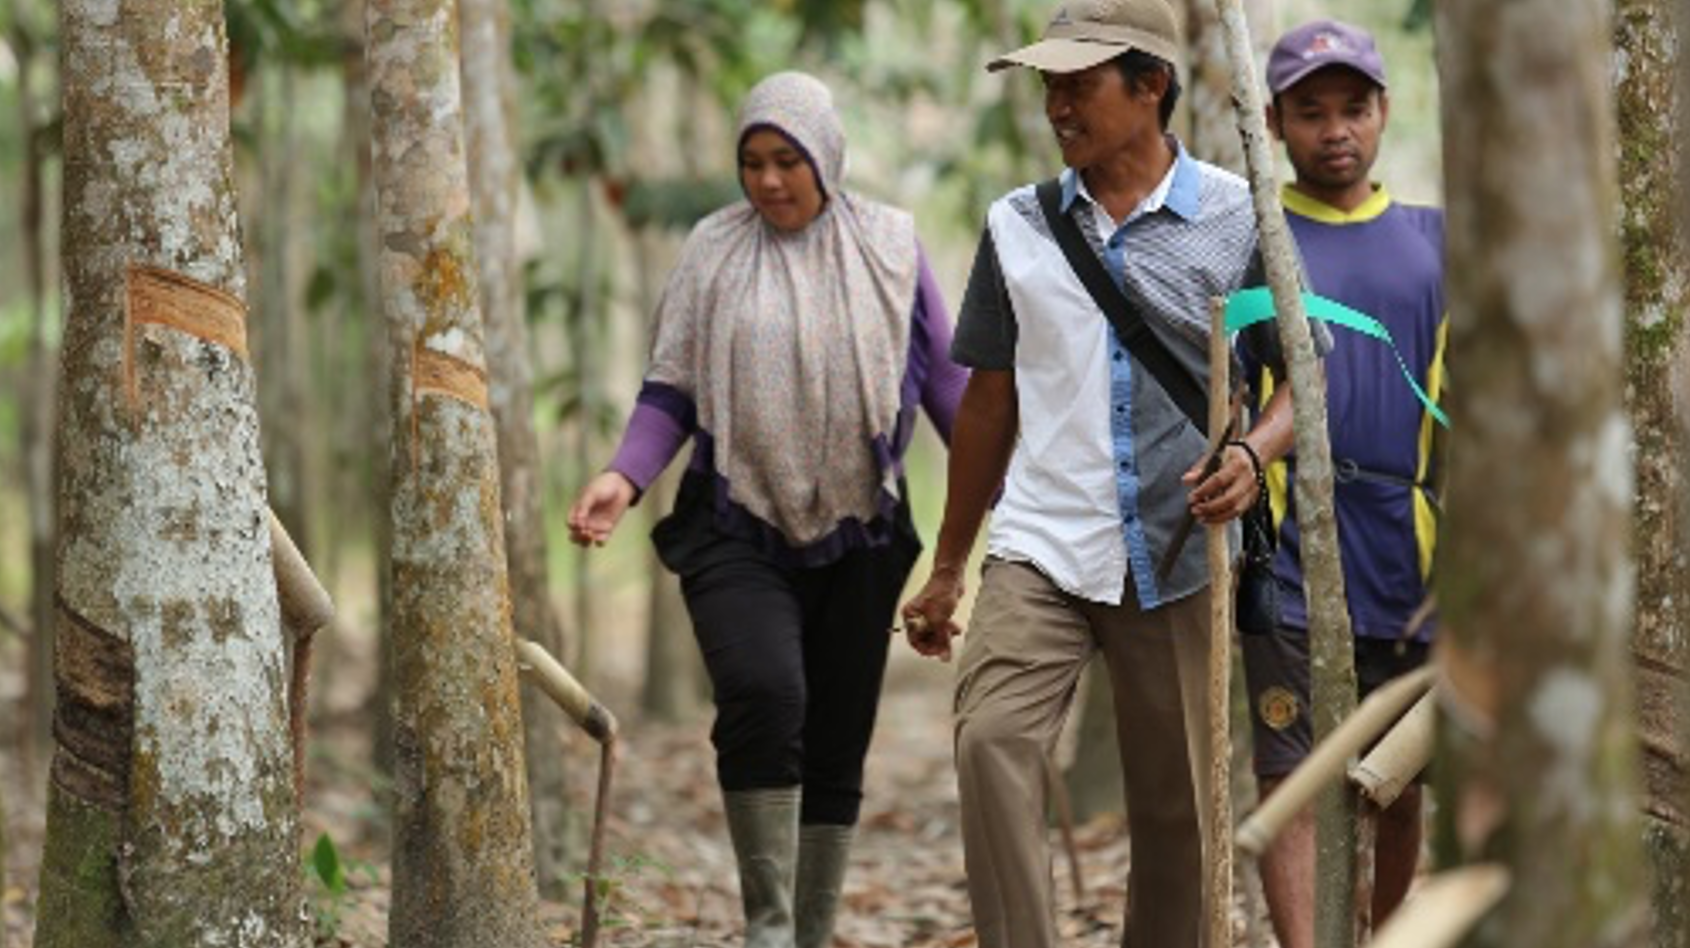 Smallholder farmers and GIZ staff surveying the natural rubber plantation in Kapuas Hulu. ©Canopy/GIZ